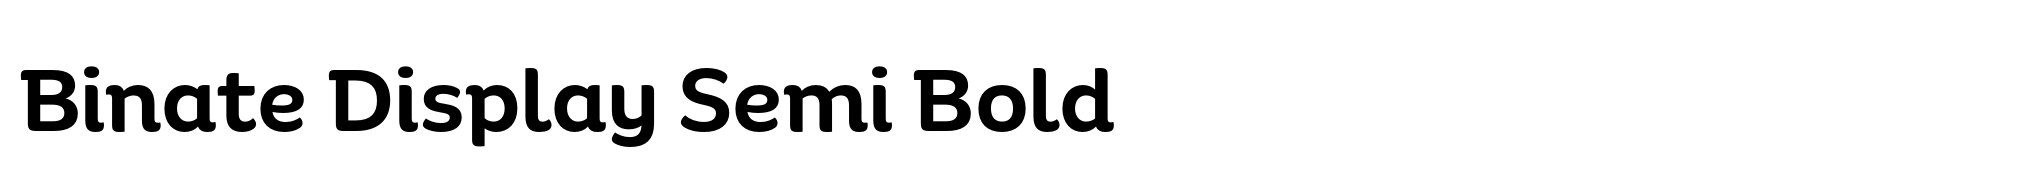 Binate Display Semi Bold image